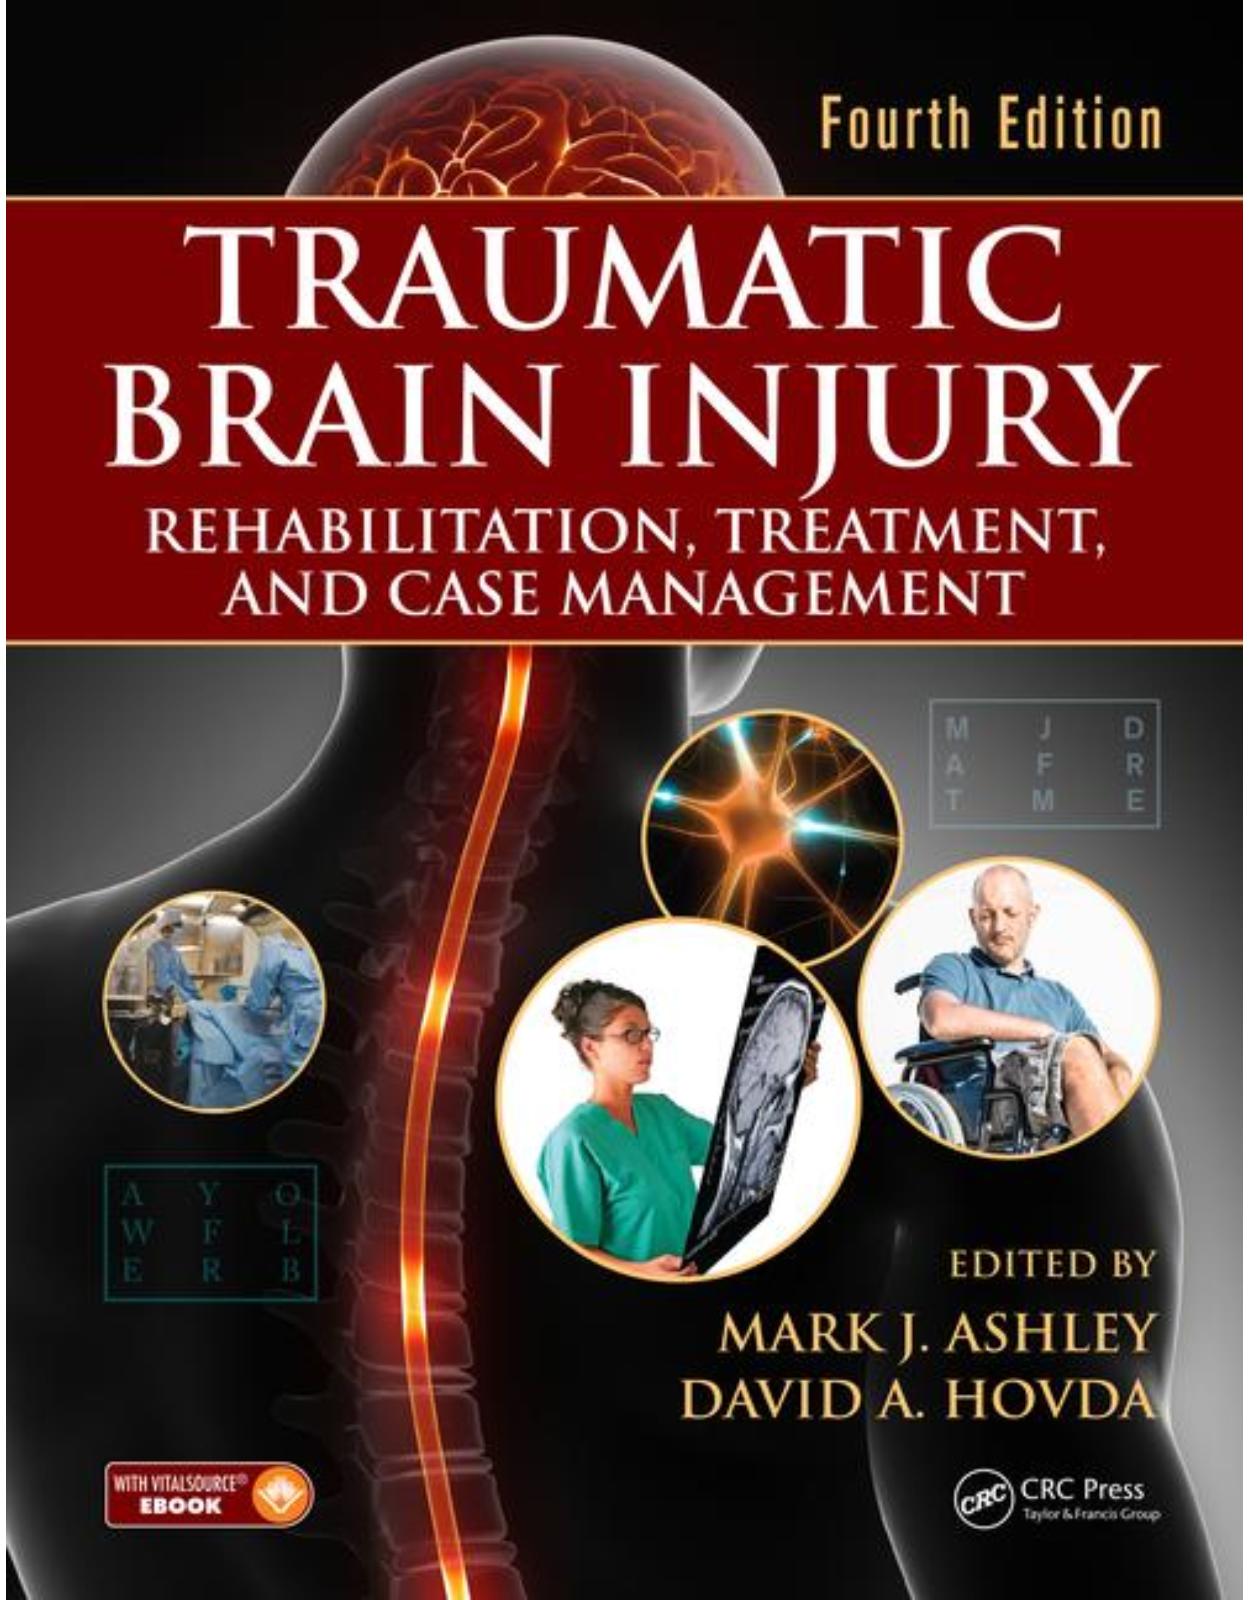 Traumatic Brain Injury: Rehabilitation, Treatment, and Case Management, Fourth Edition